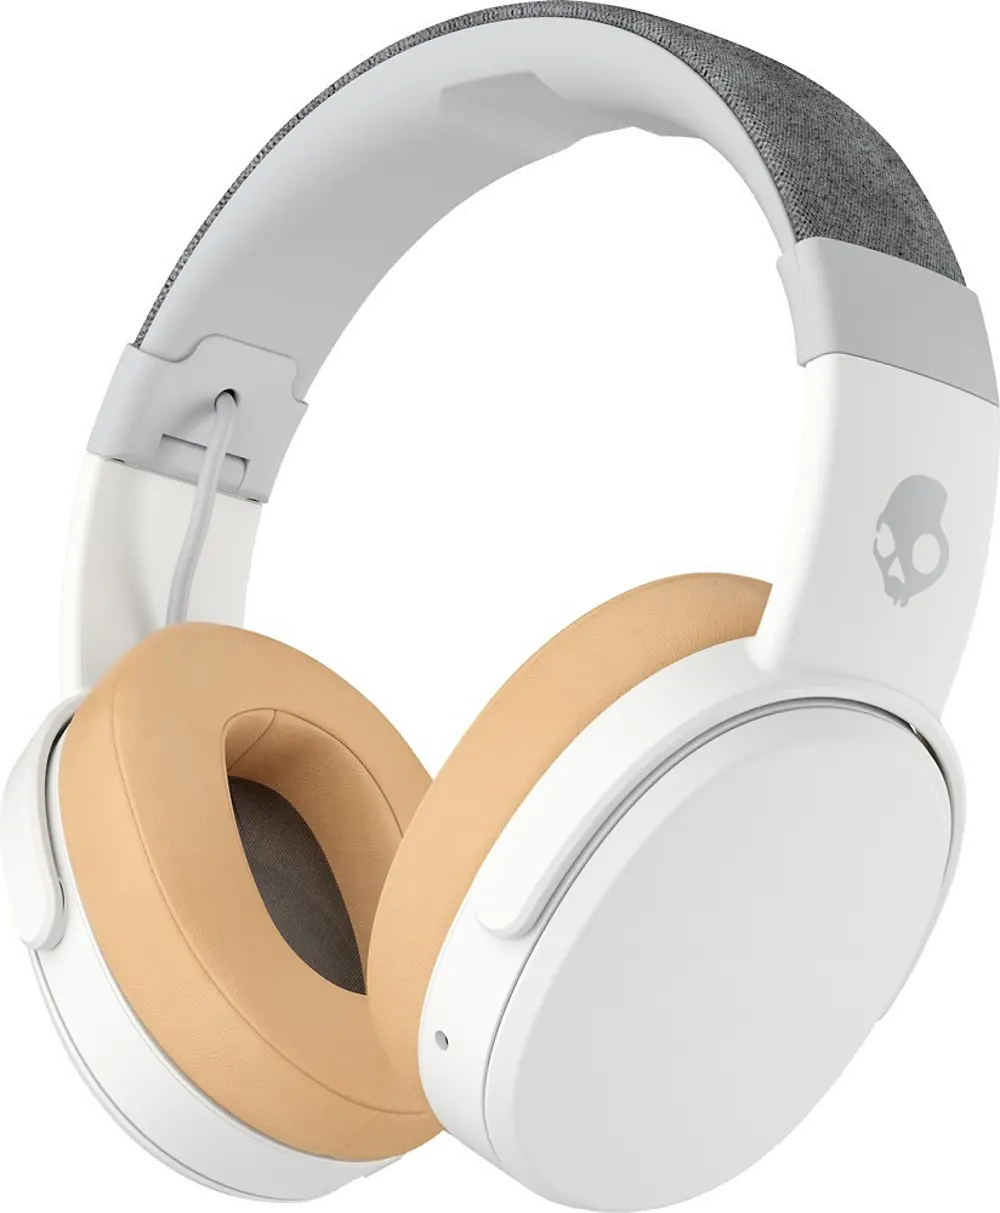 S6CRW-K590,GRY,CR,WS Skullcandy Crusher Wireless Over-the-Ear Headphones - Gray/Tan-1